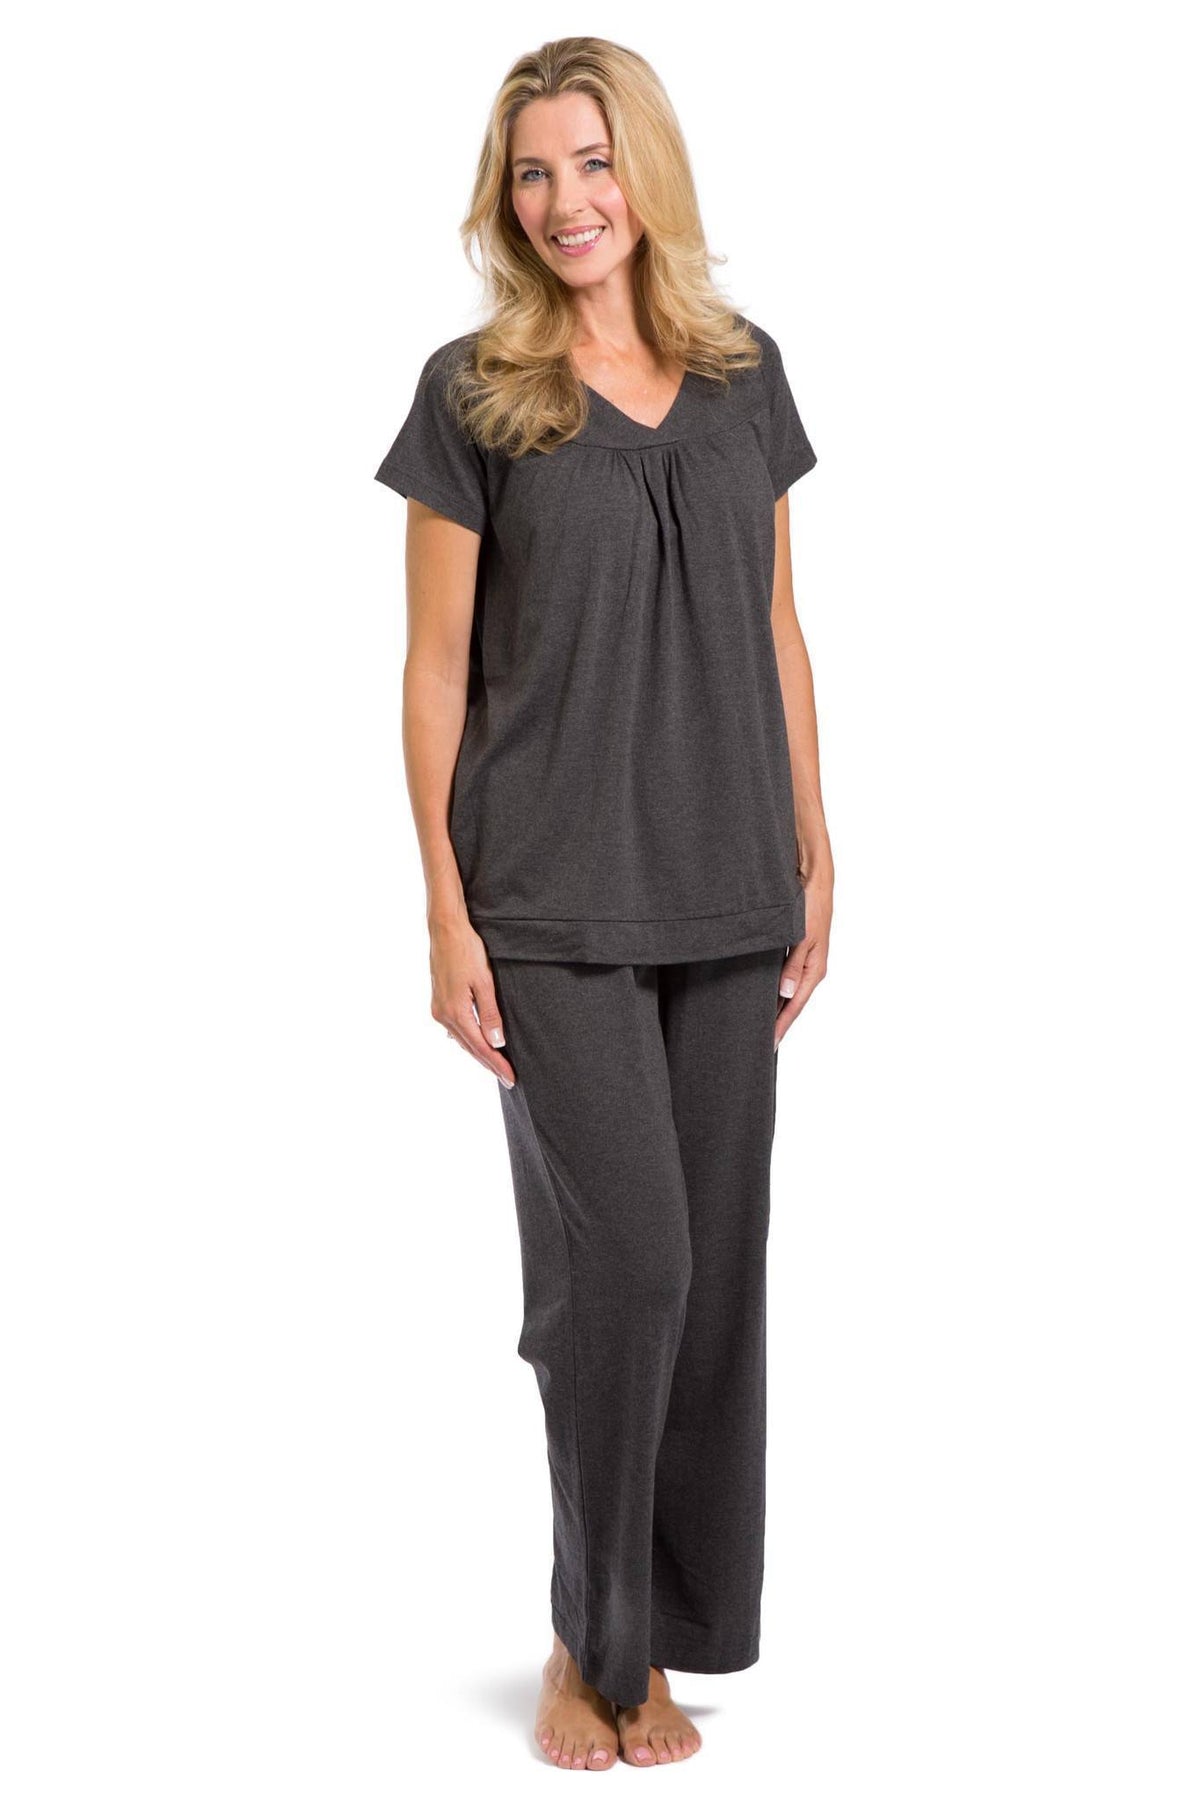 Women's Pajamas | Organic Cotton V-Neck Pajama Set | Fishers Finery